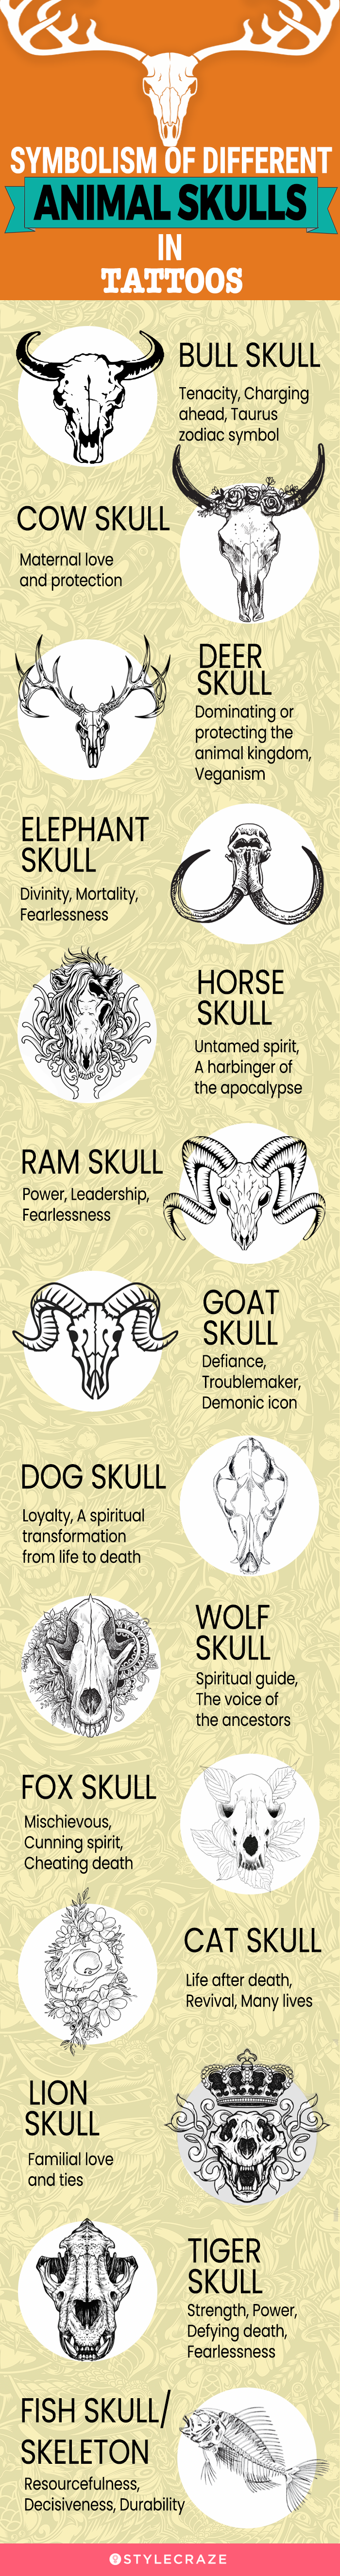 symbolism of different animal skulls in tattoos [infographic]